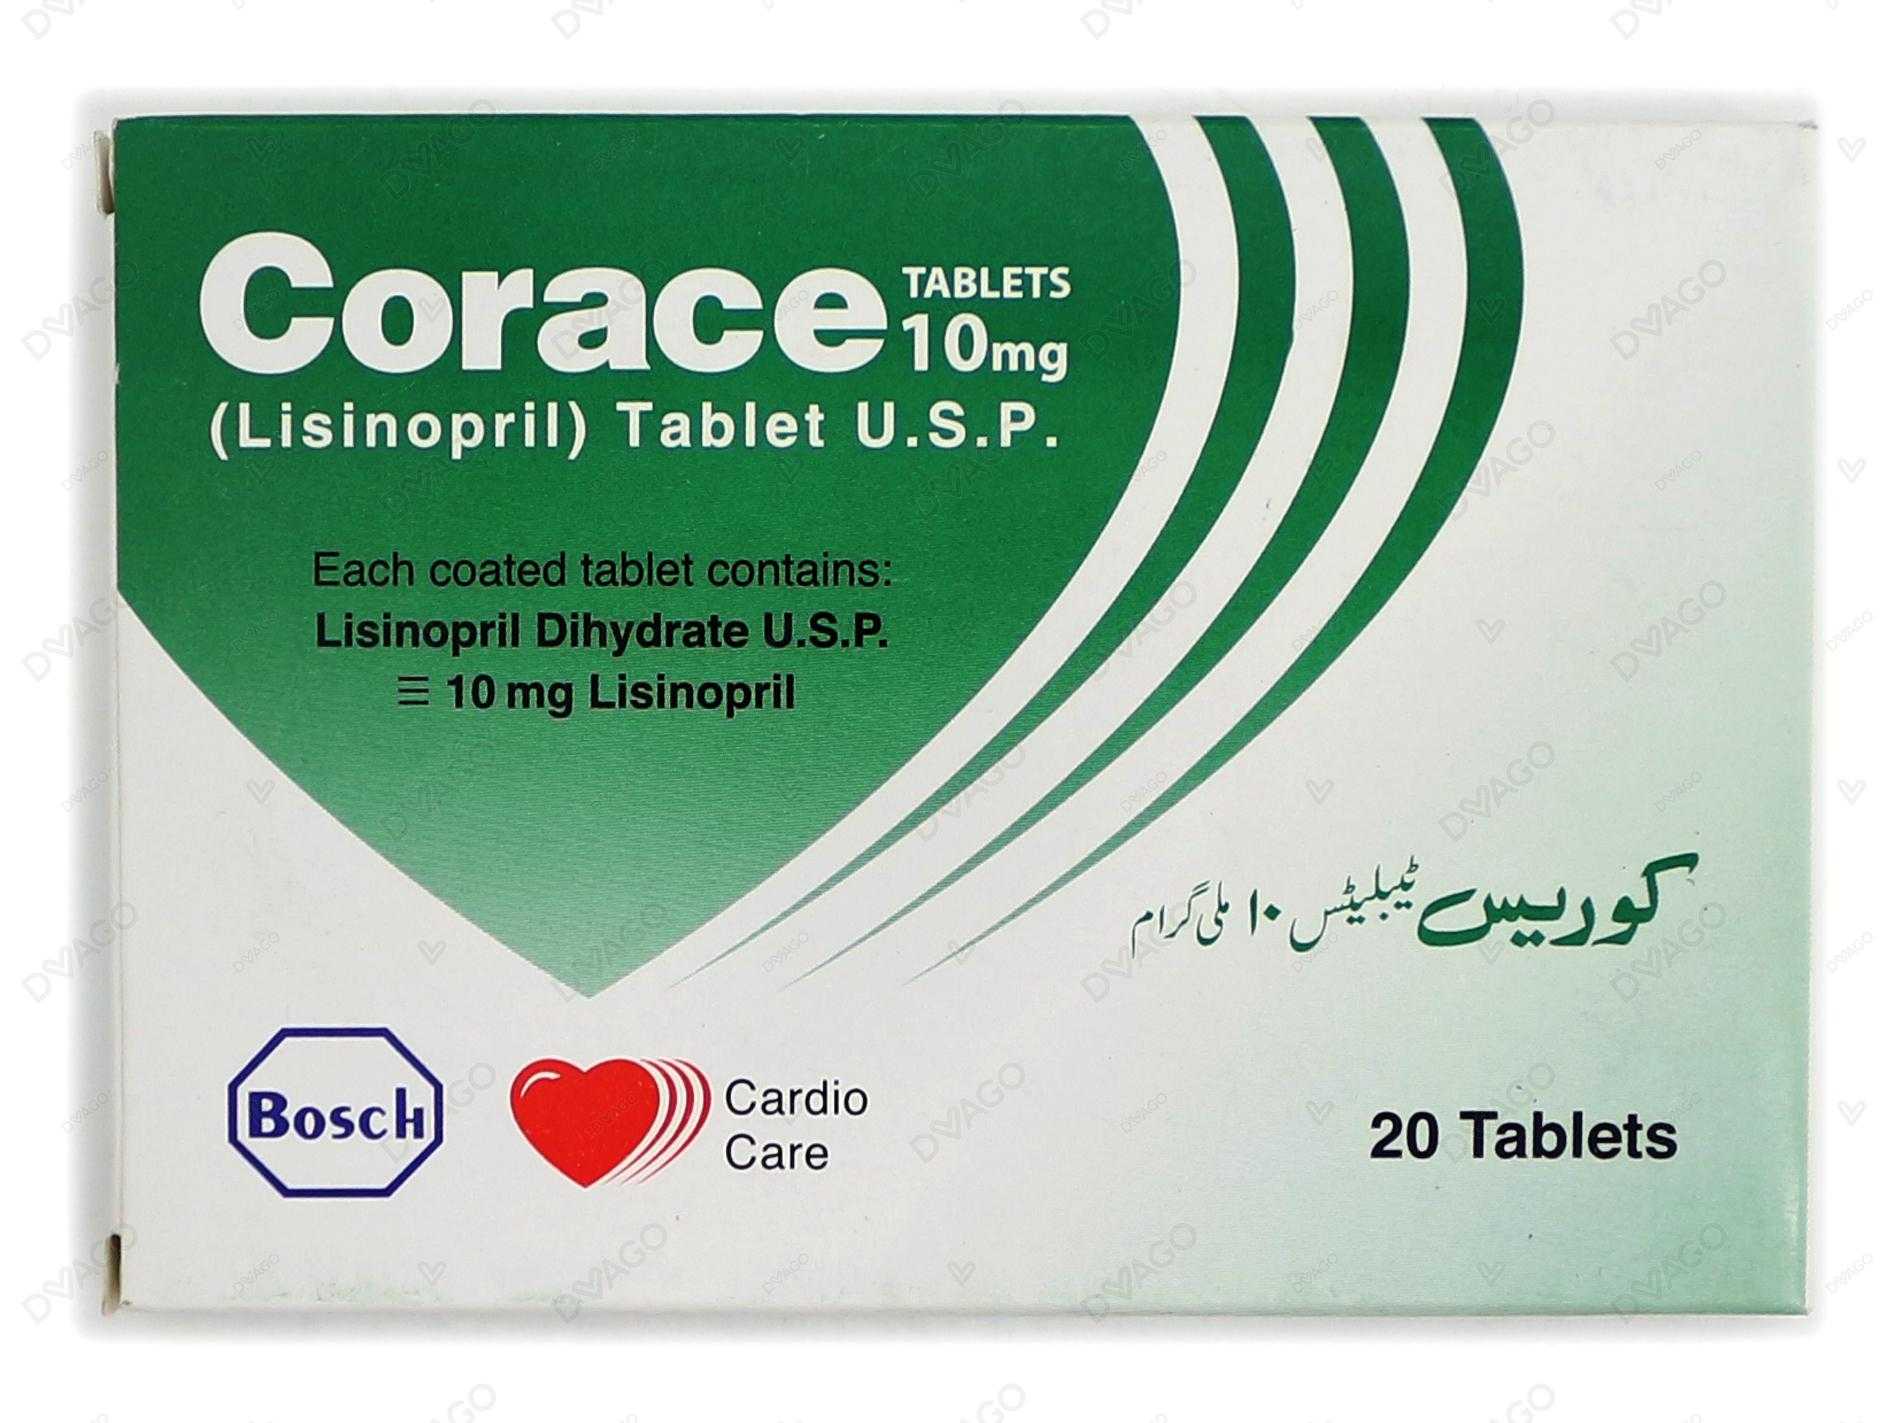 corace tablets 10mg